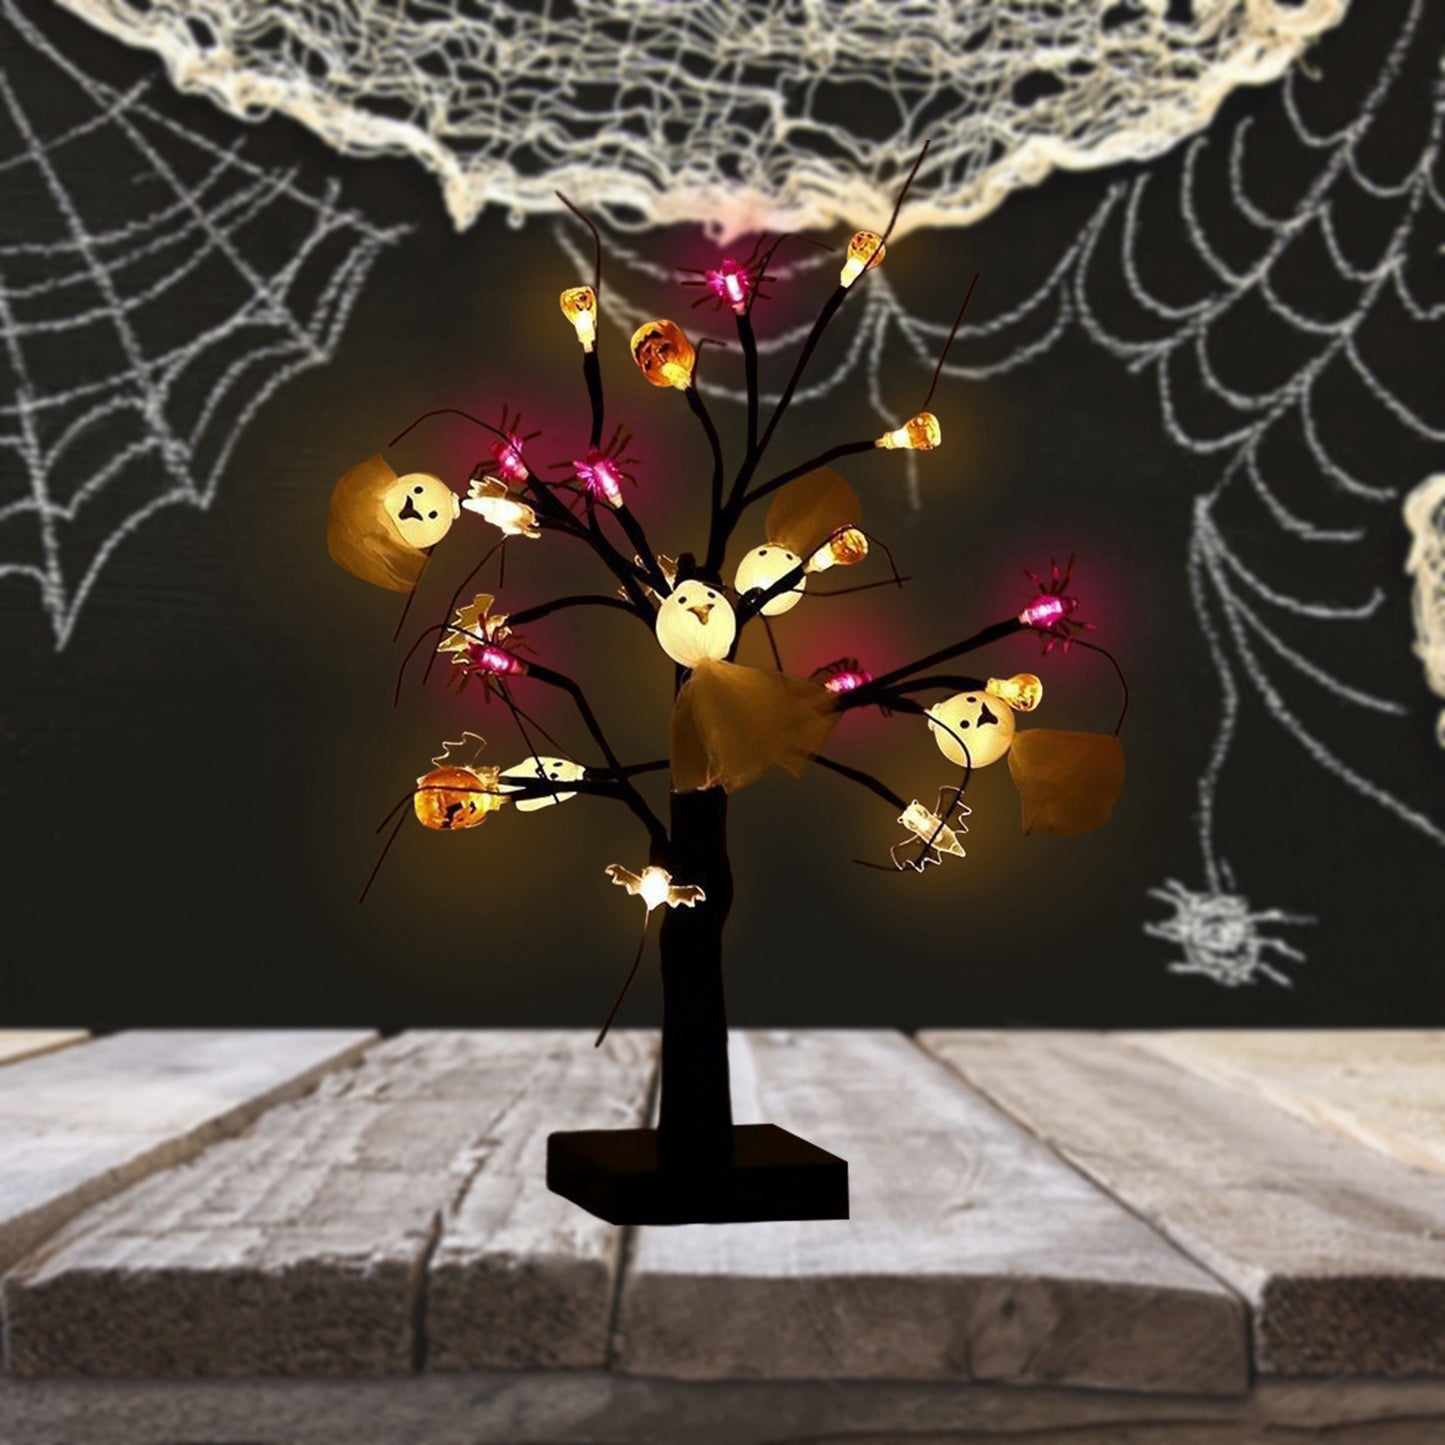 Spooky Halloween Decorations Light